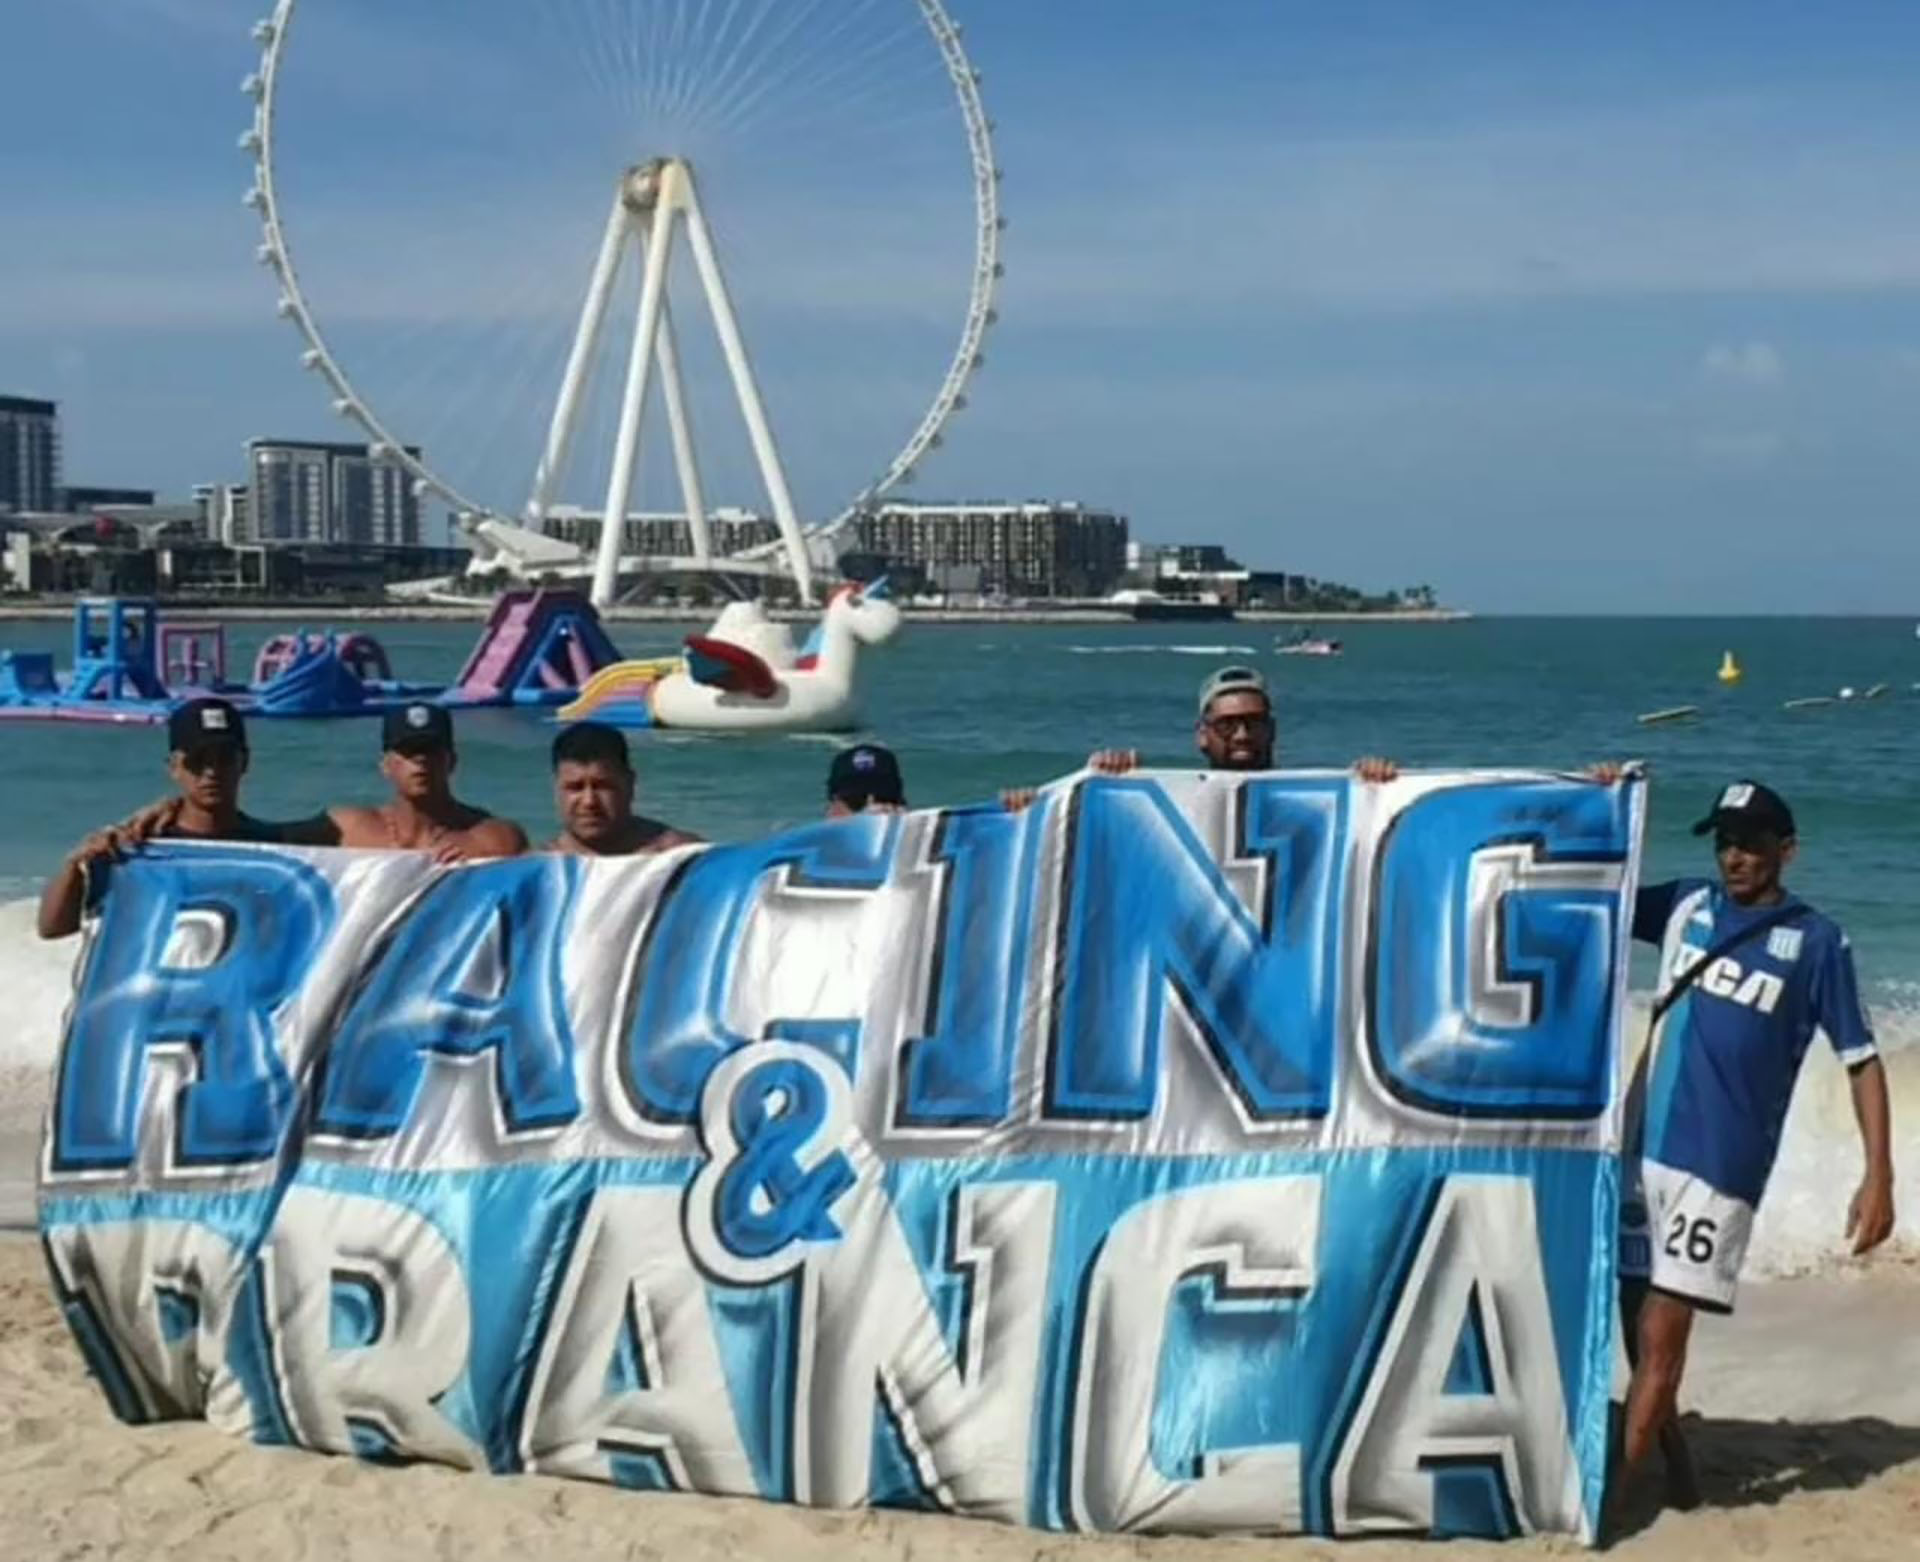 The barrabravas of Los pibes de Racing on the beaches of Dubai